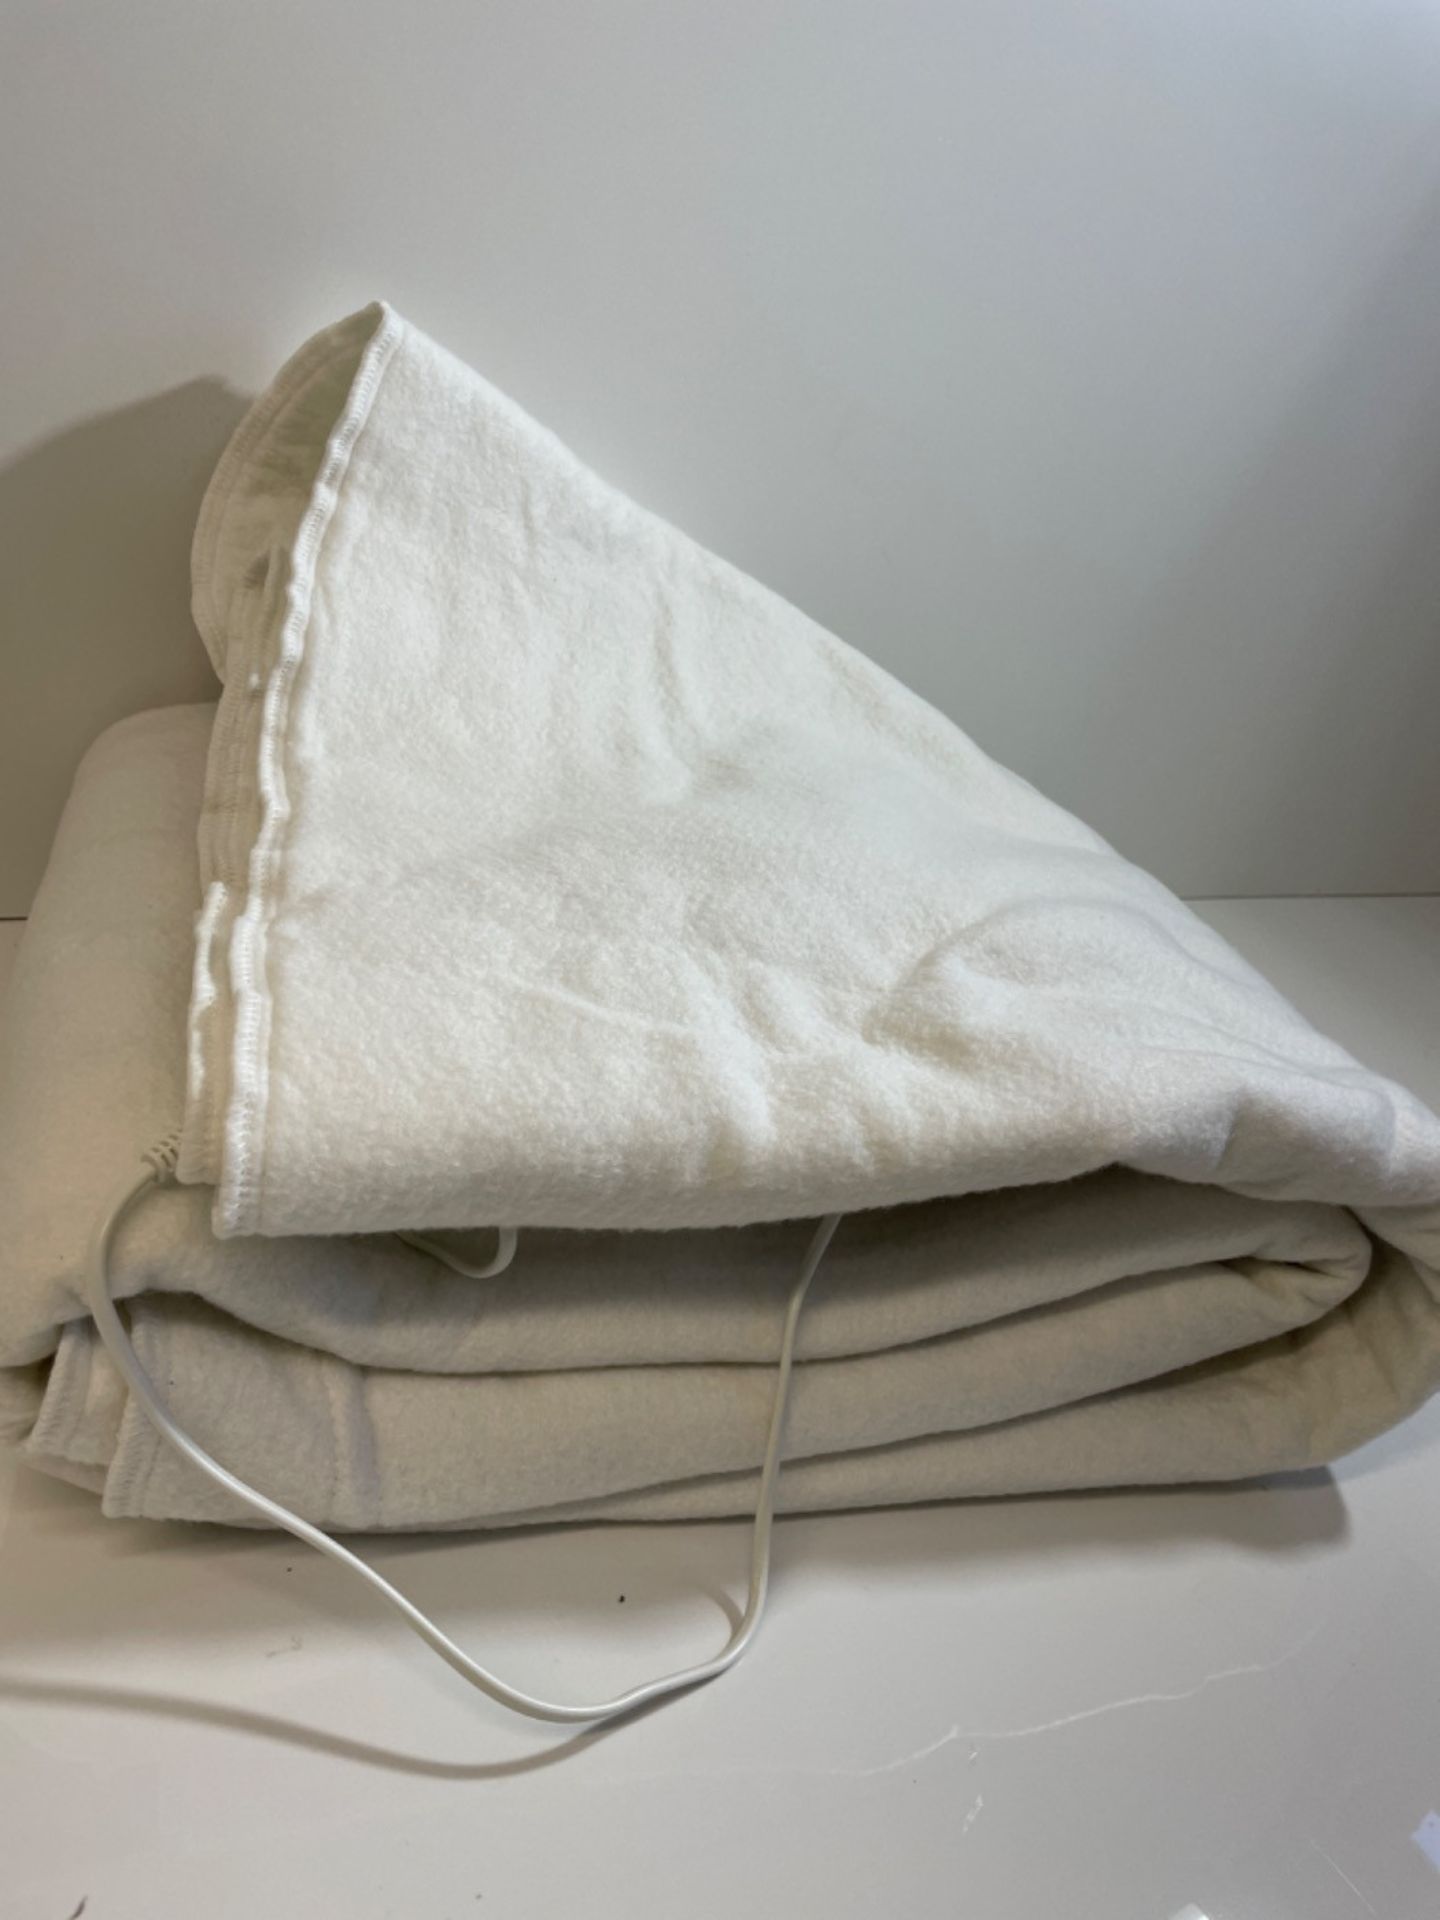 Silentnight Comfort Control Electric Blanket Super King - Heated Electric Fitted Underblanket wit... - Bild 2 aus 2